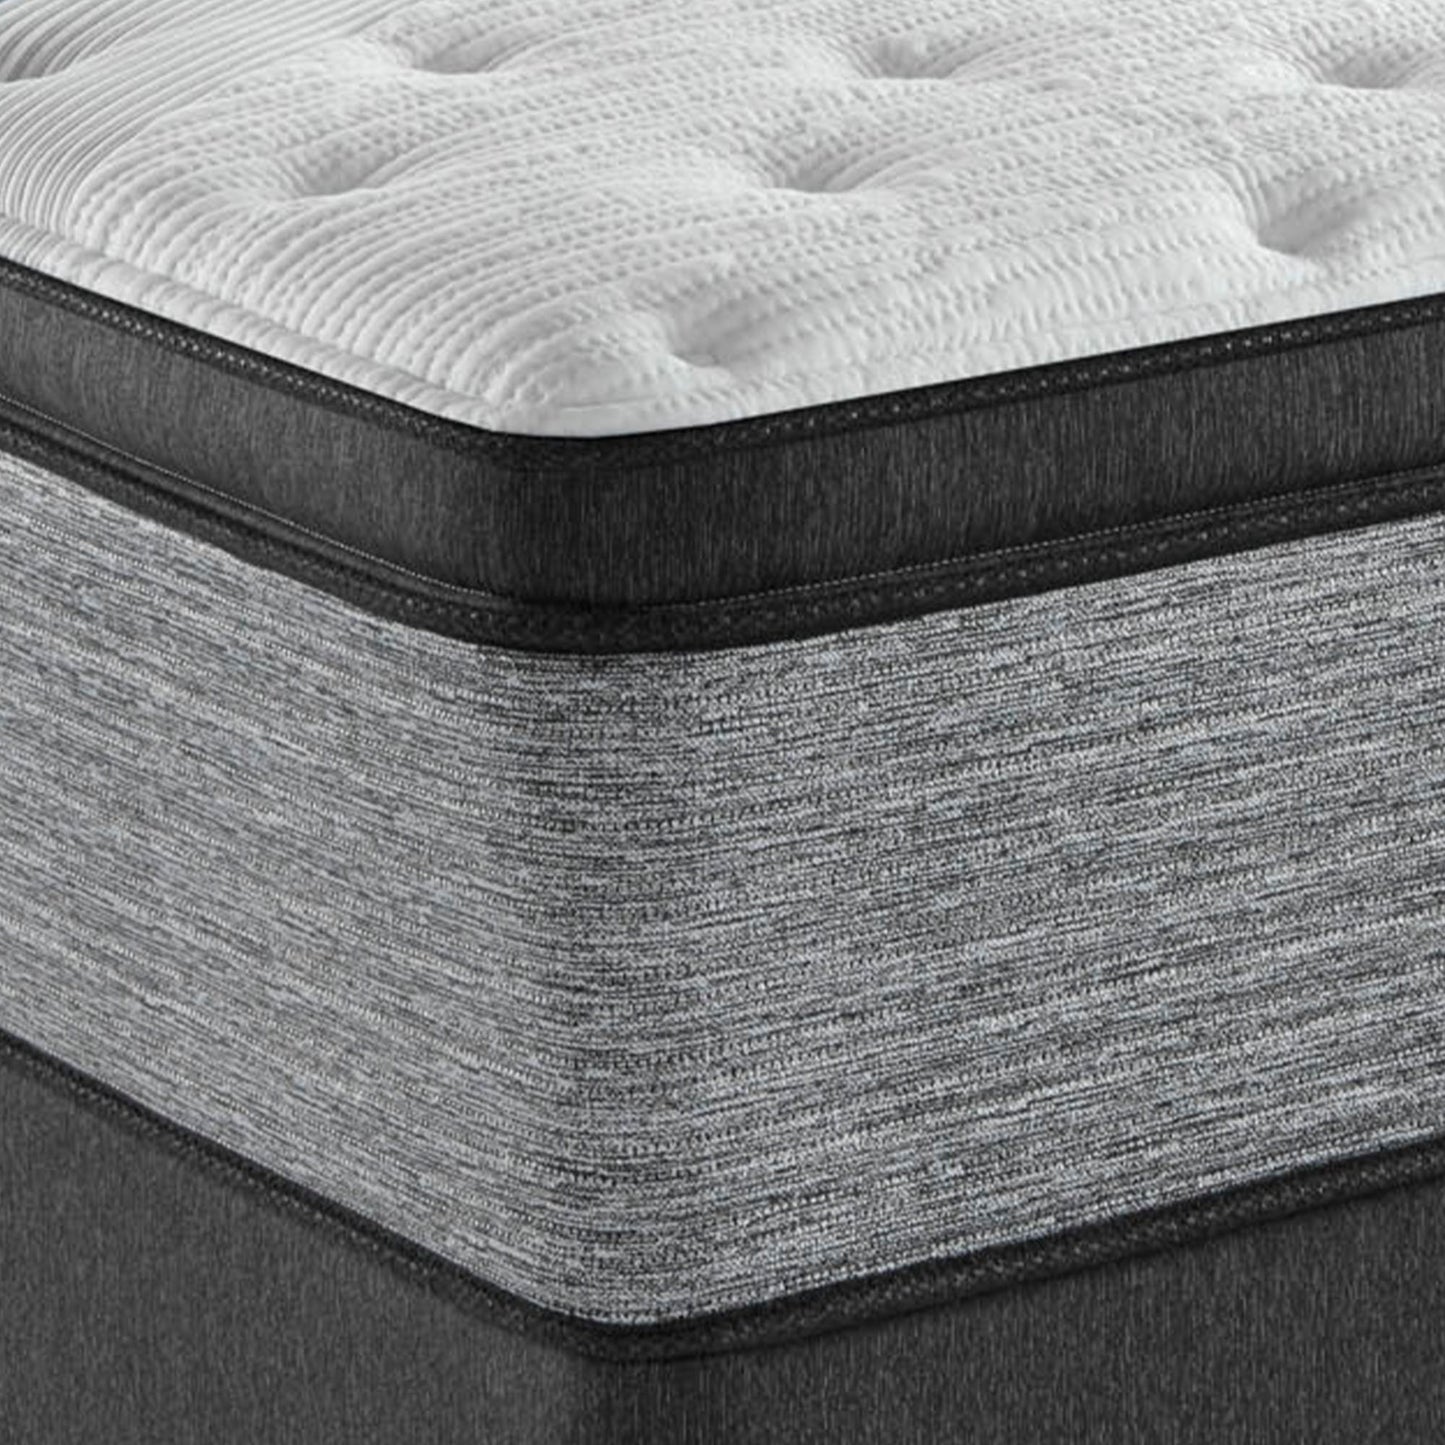 Beautyrest-Harmony Lux Carbon Series Medium Pillow Top